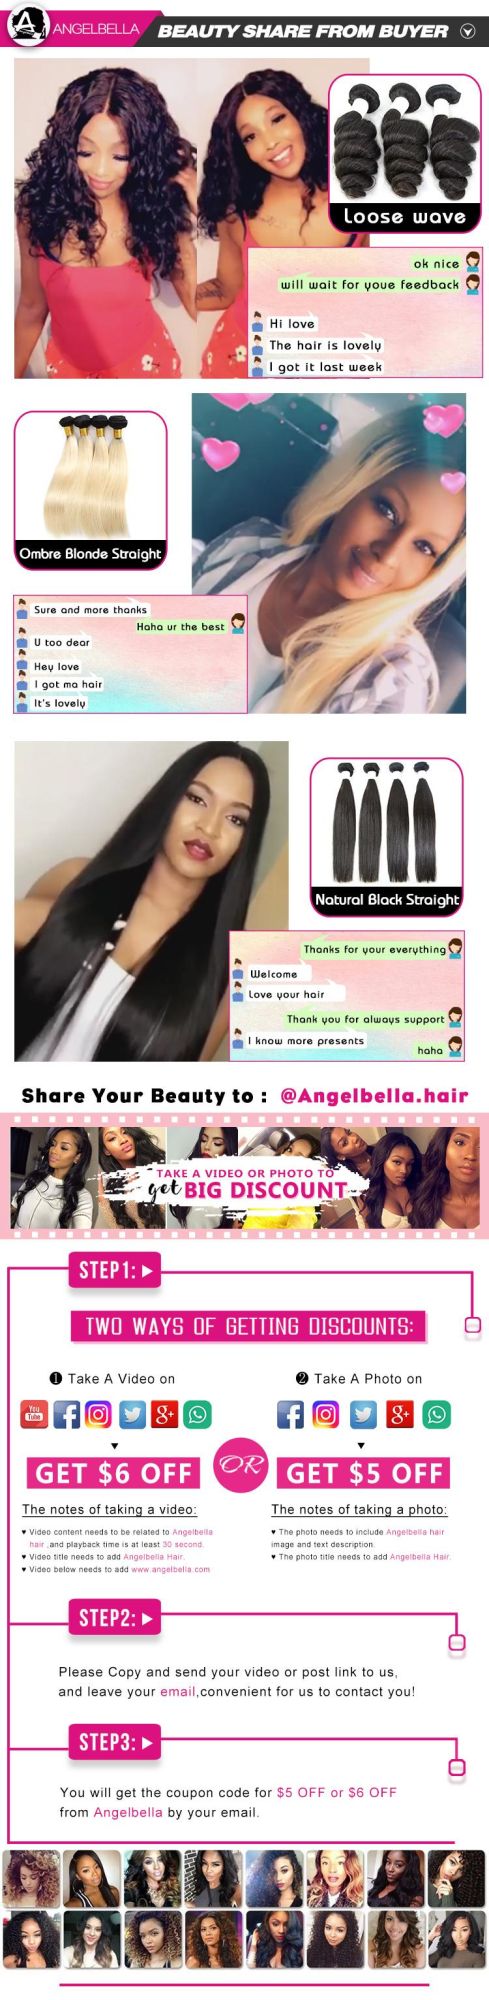 Angelbella High Quality Guaranted 1b# Grey Color Hair 100% Raw Mink Brazilian Virgin Human Hair Weaving